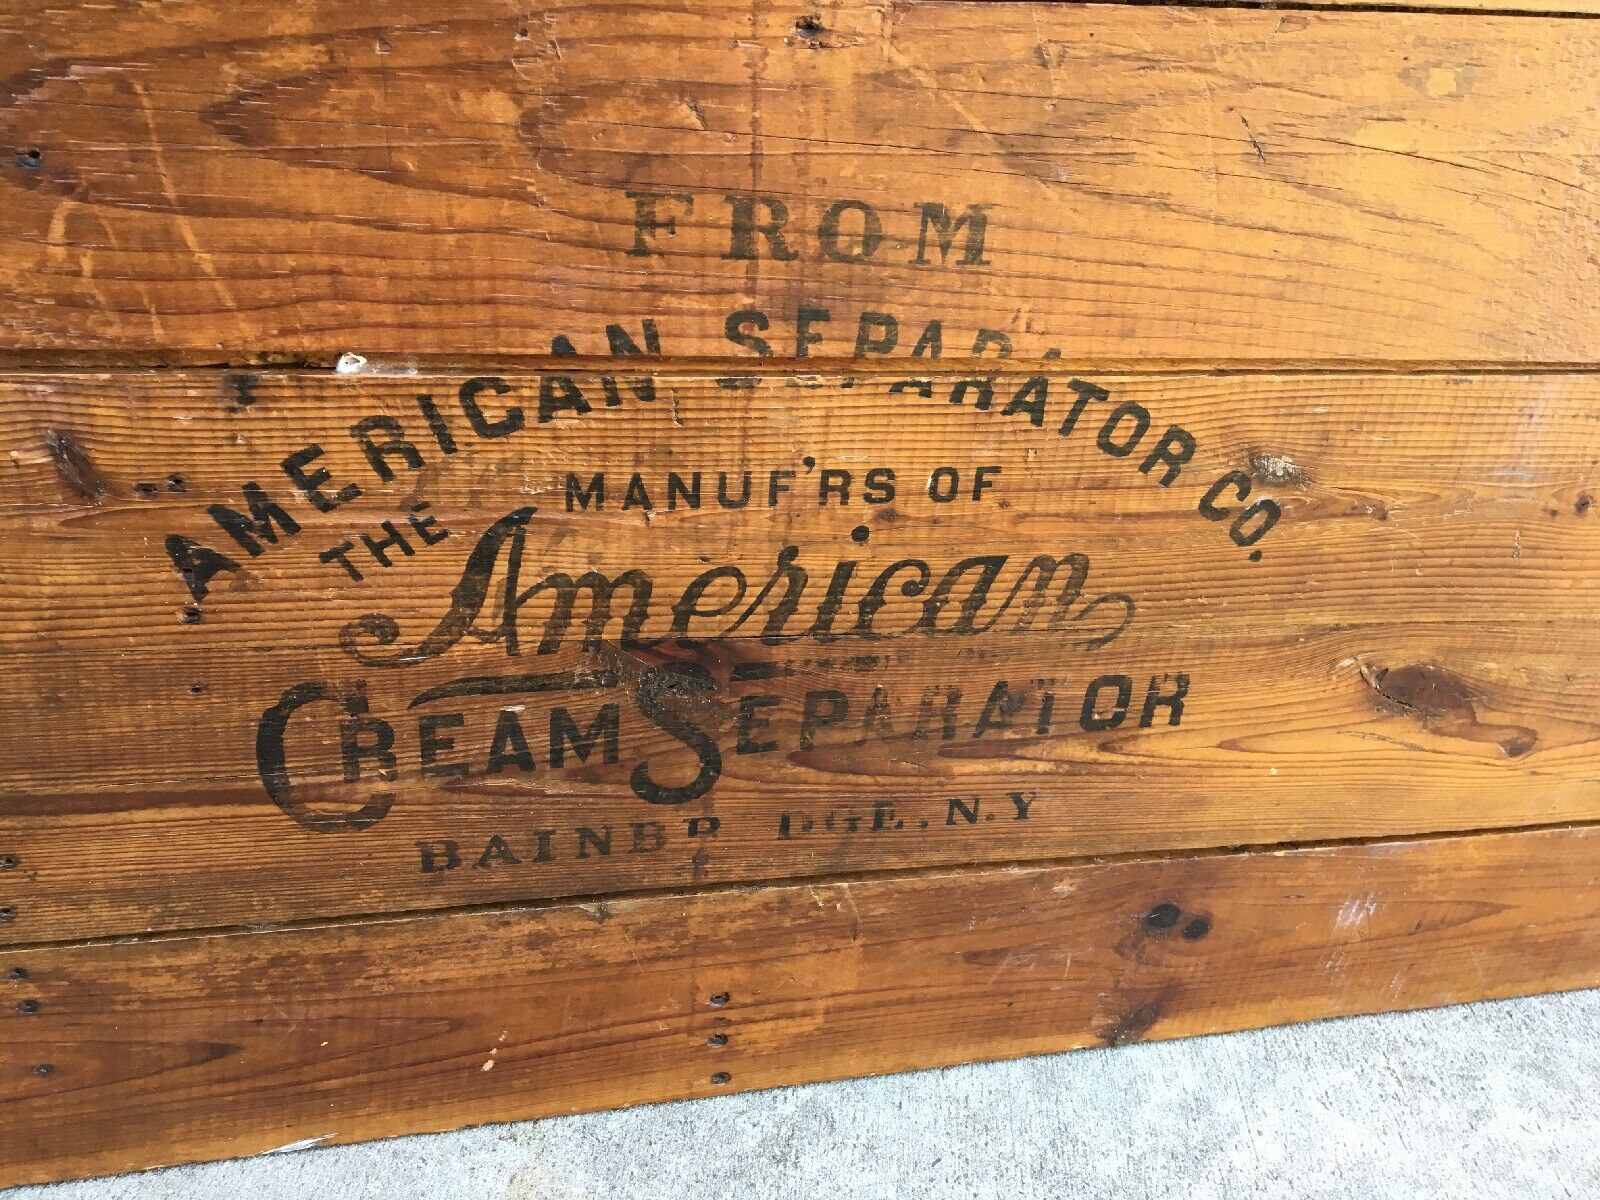 XL Antique Wooden Crate American Cream Separator Bainbridge New York Wood Box